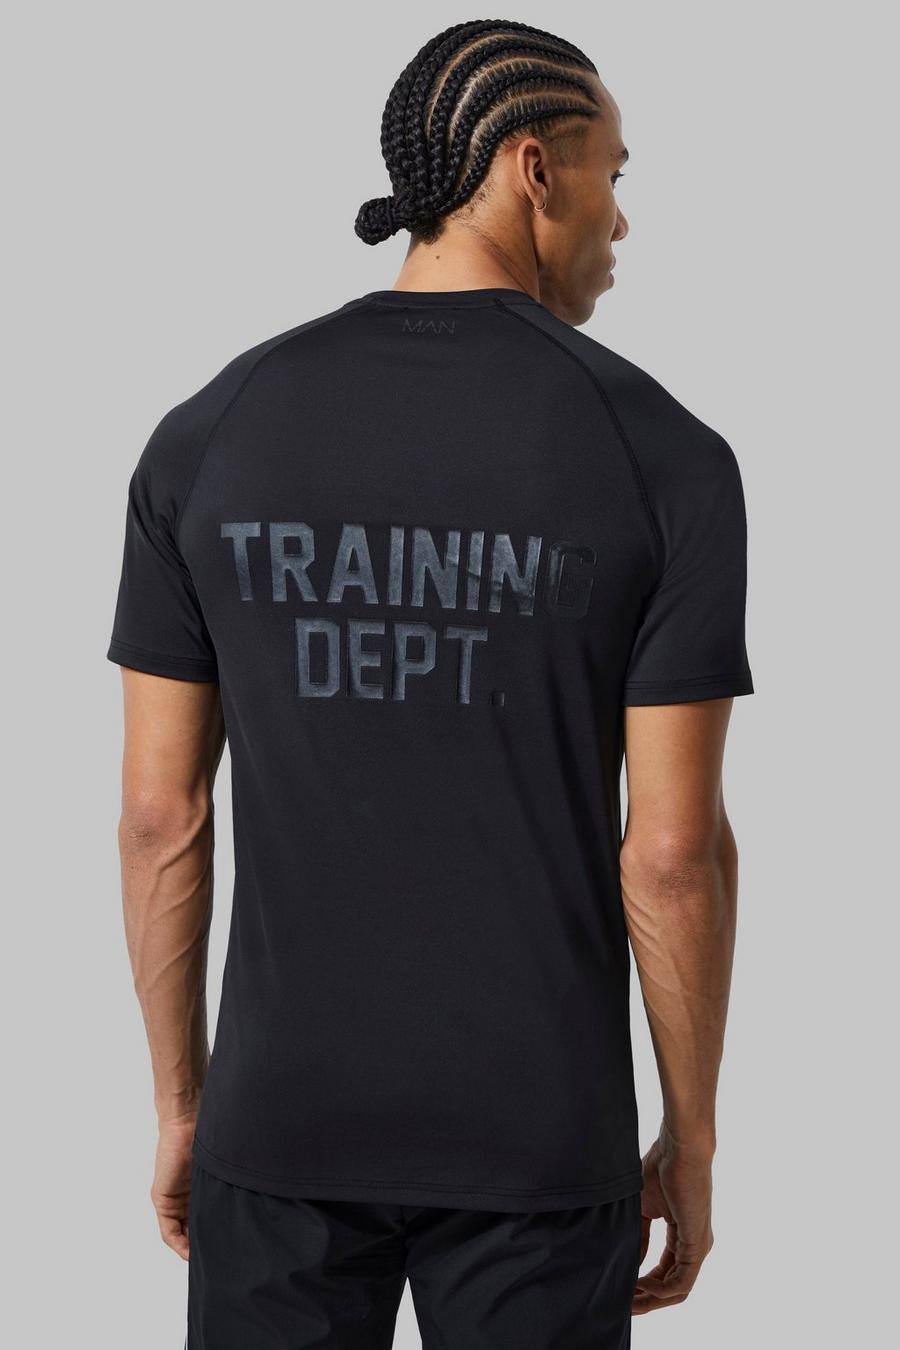 Black noir Tall Muscle Fit Man Active Training Dept T-Shirt